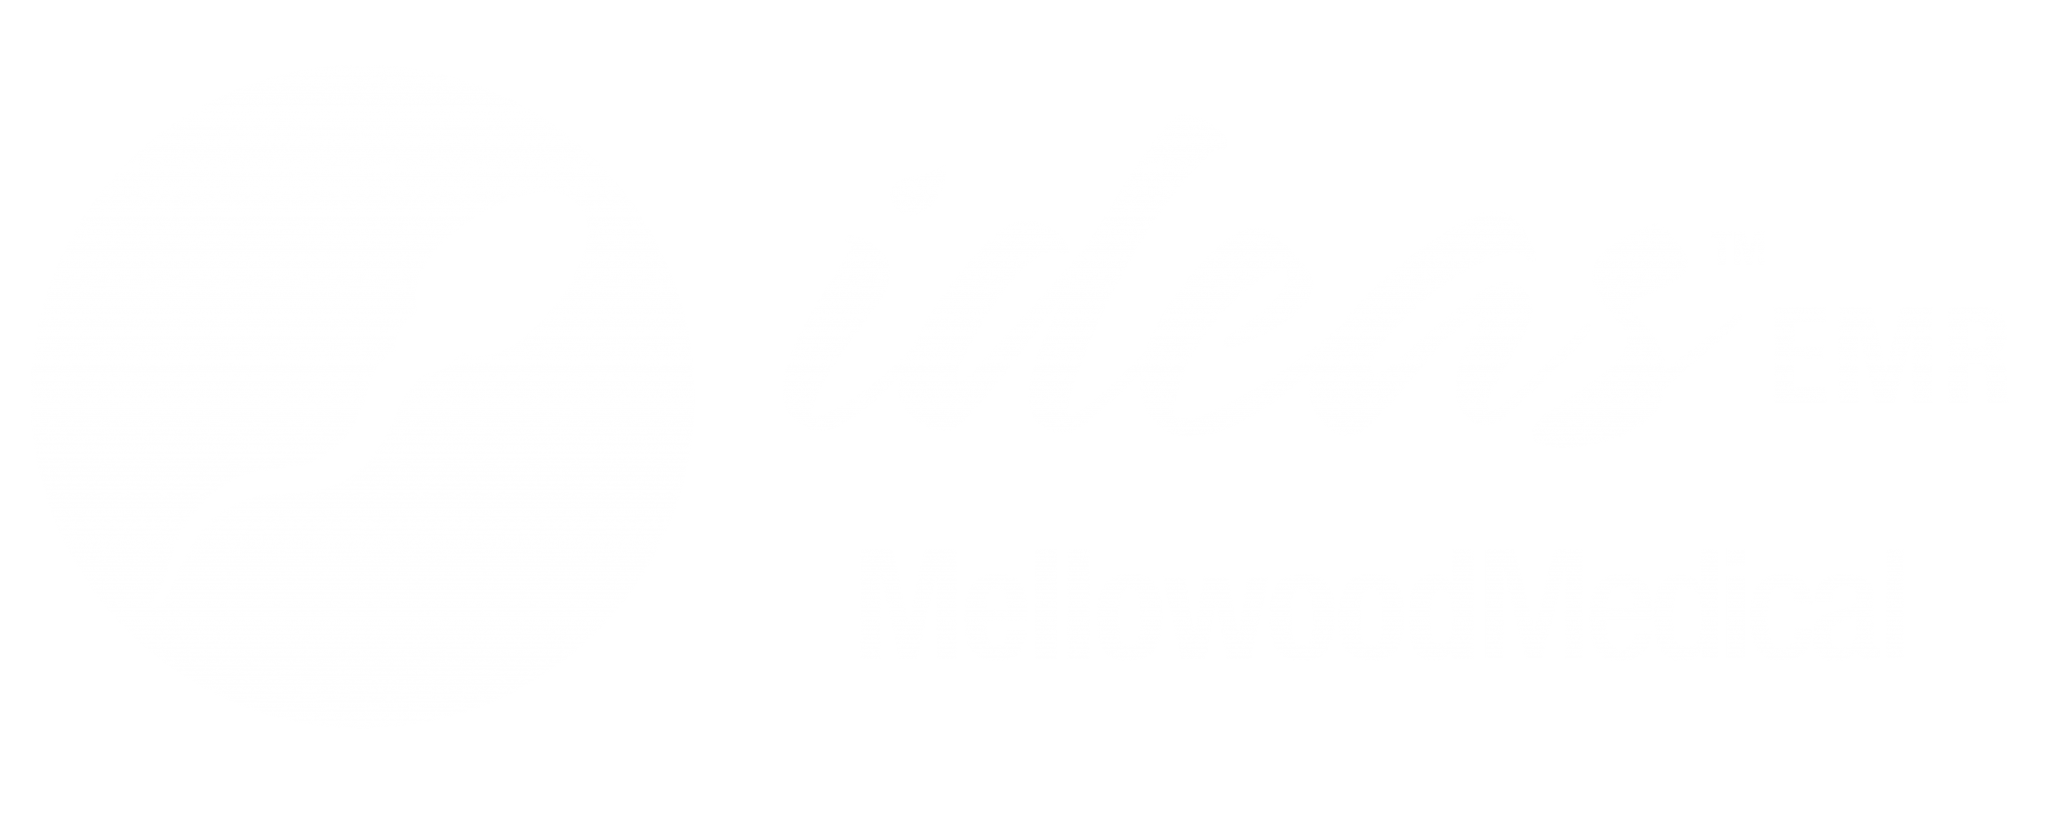 Mellowood Medical Inc. white logo